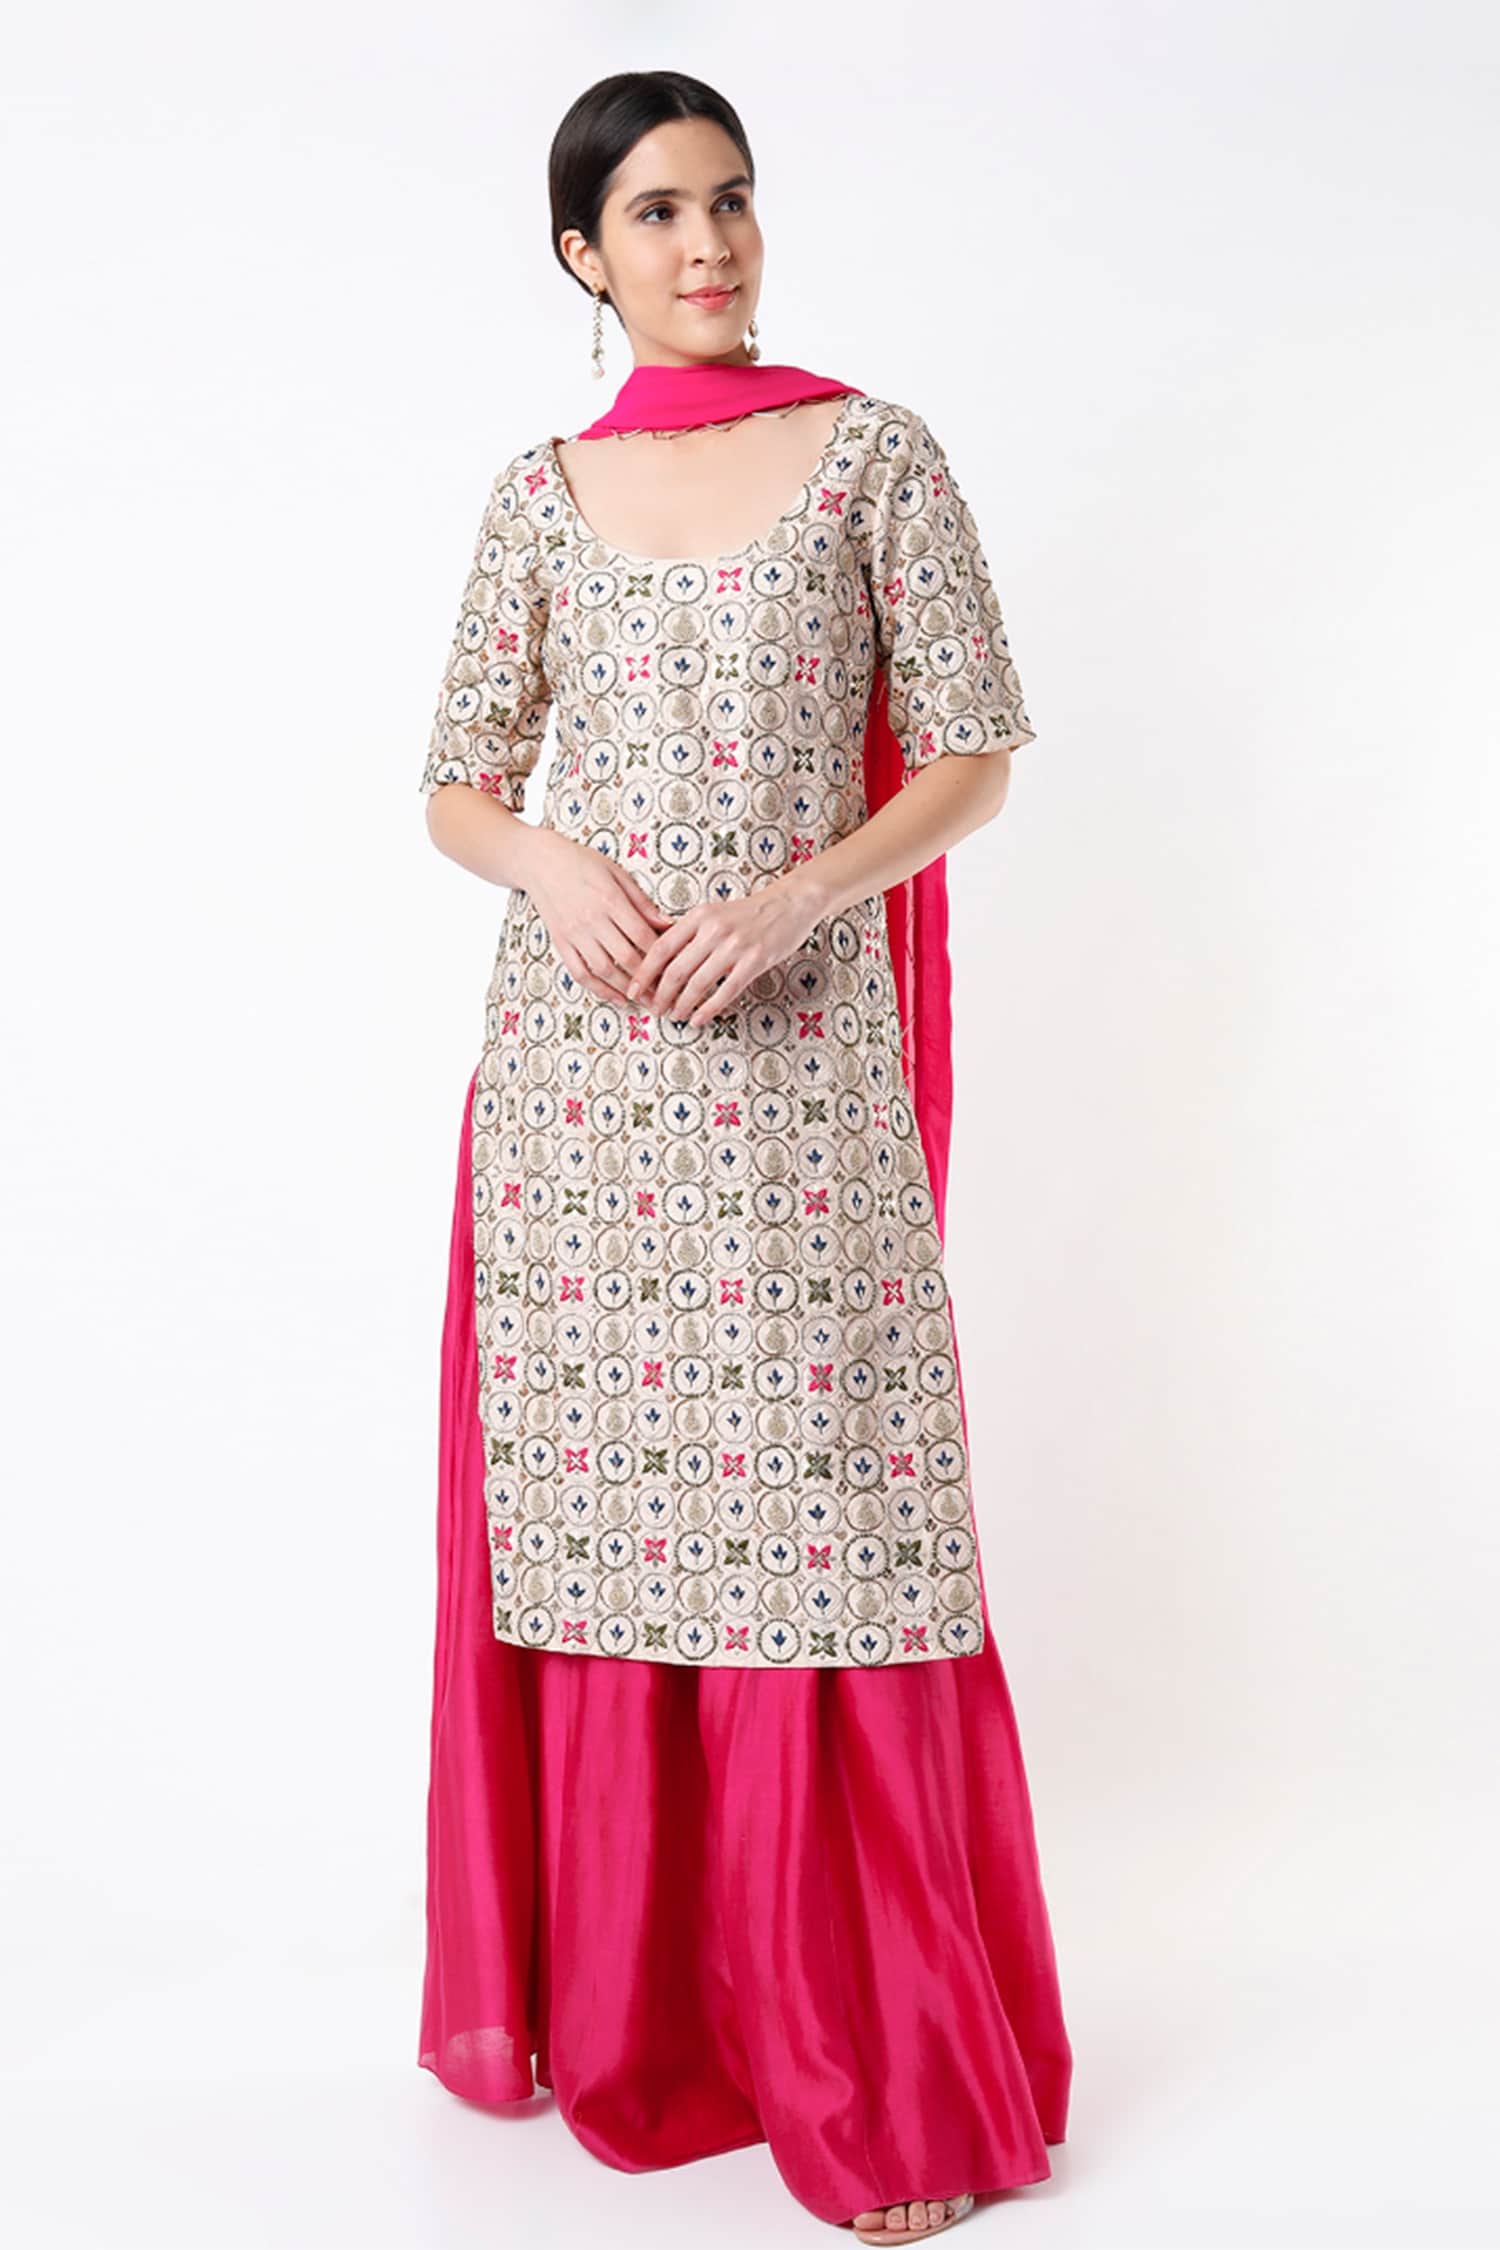 Net kurti designs style | Net kurti designs party wear | Net suits design  indian | Long … | Fashion show dresses, Sleeves designs for dresses,  Stylish dress designs